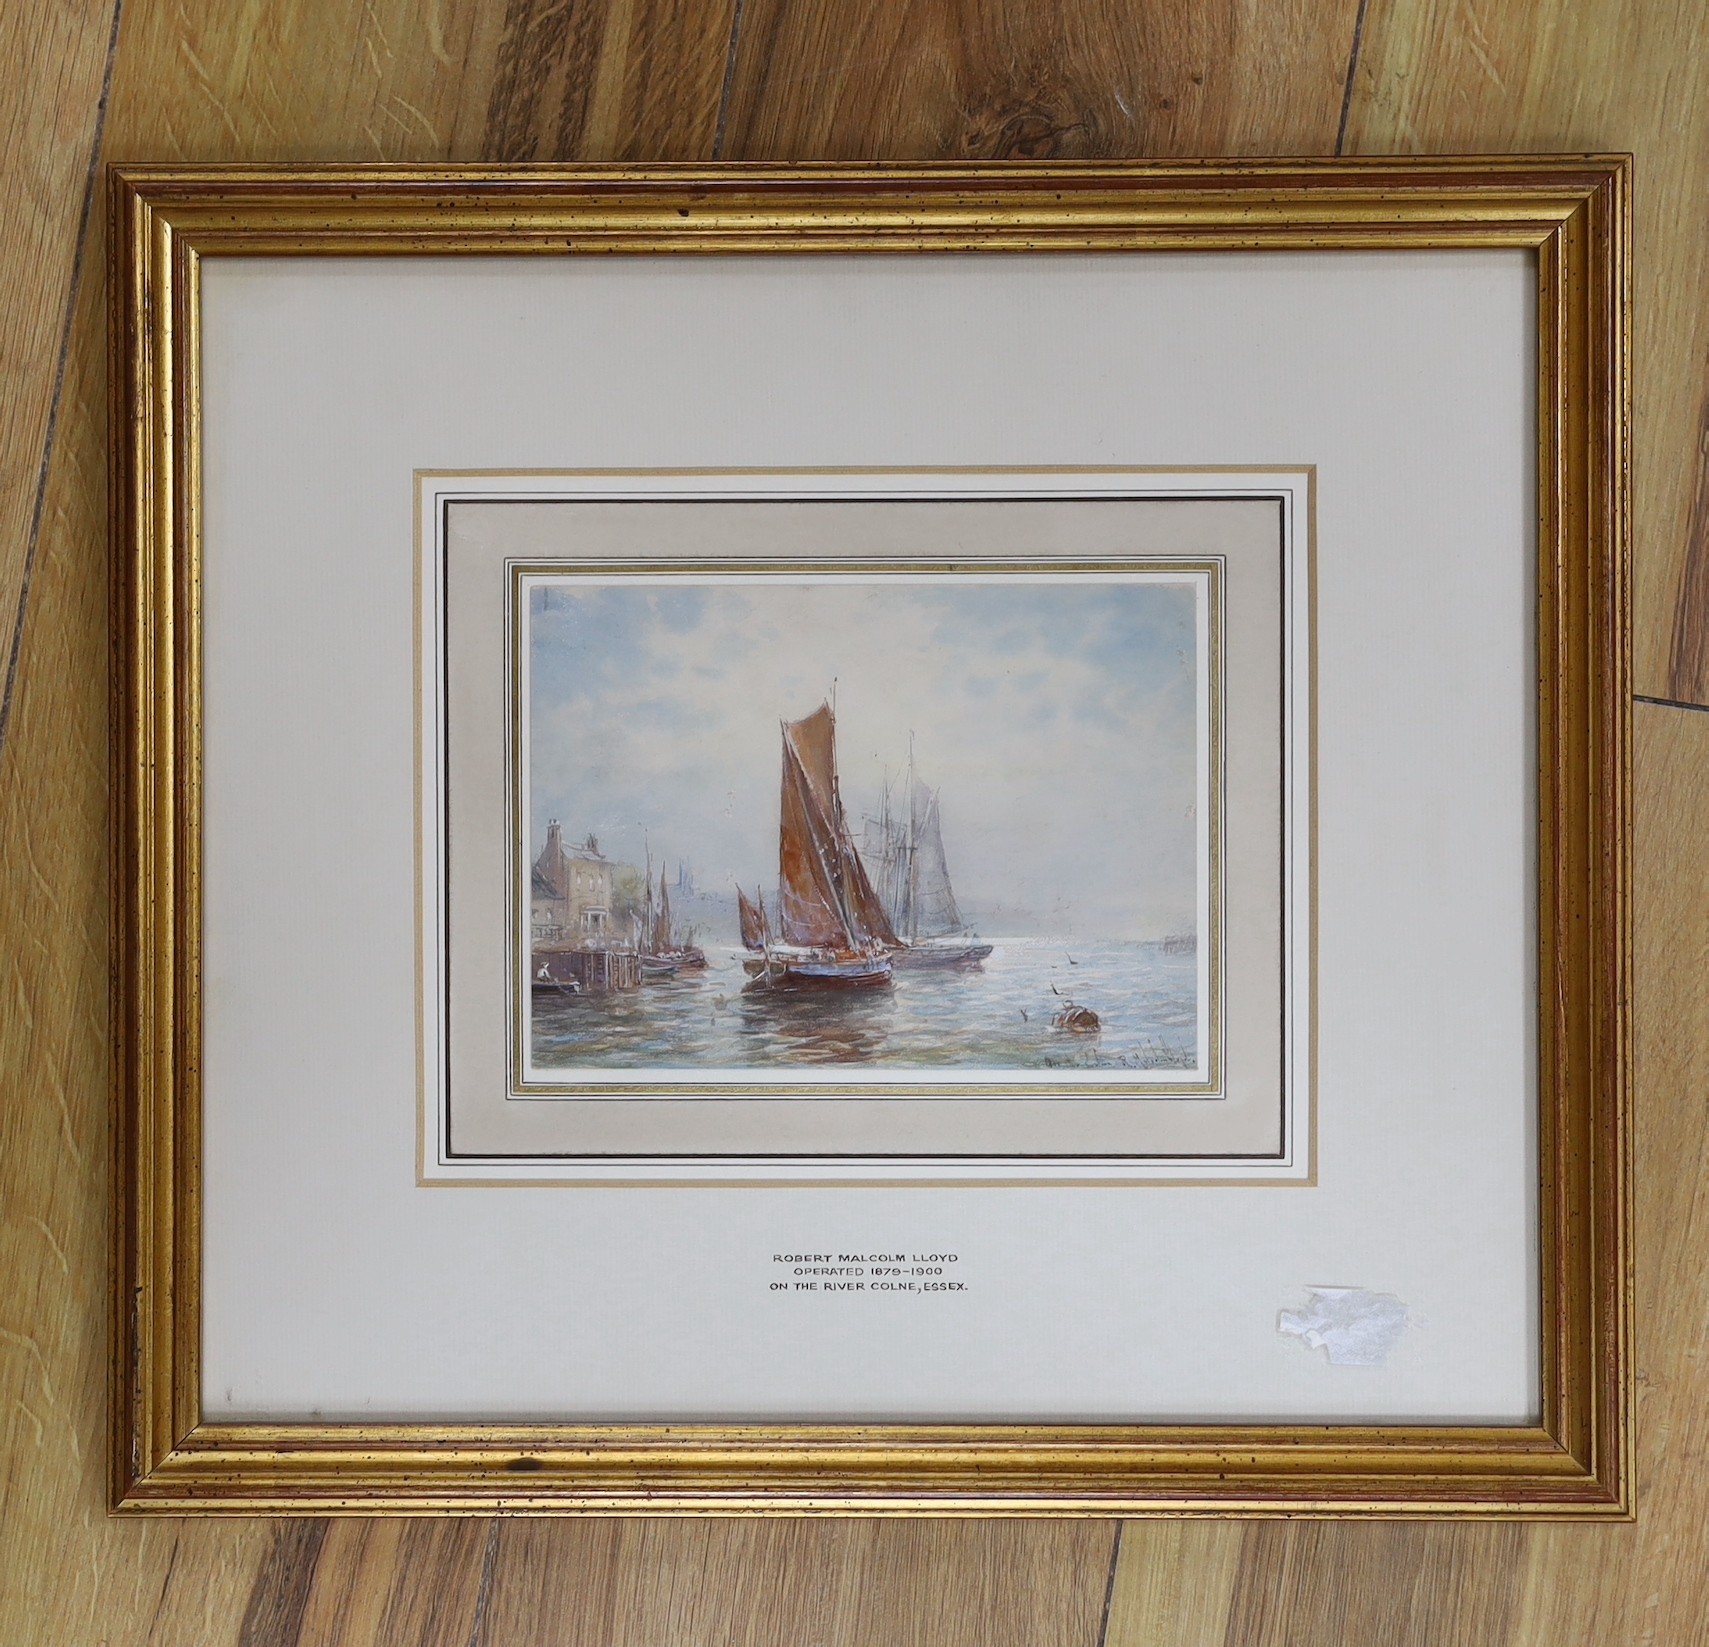 Robert Malcolm Lloyd (fl.1879-1900), watercolour, 'On the River Colne, Essex', signed, 12 x 17cm